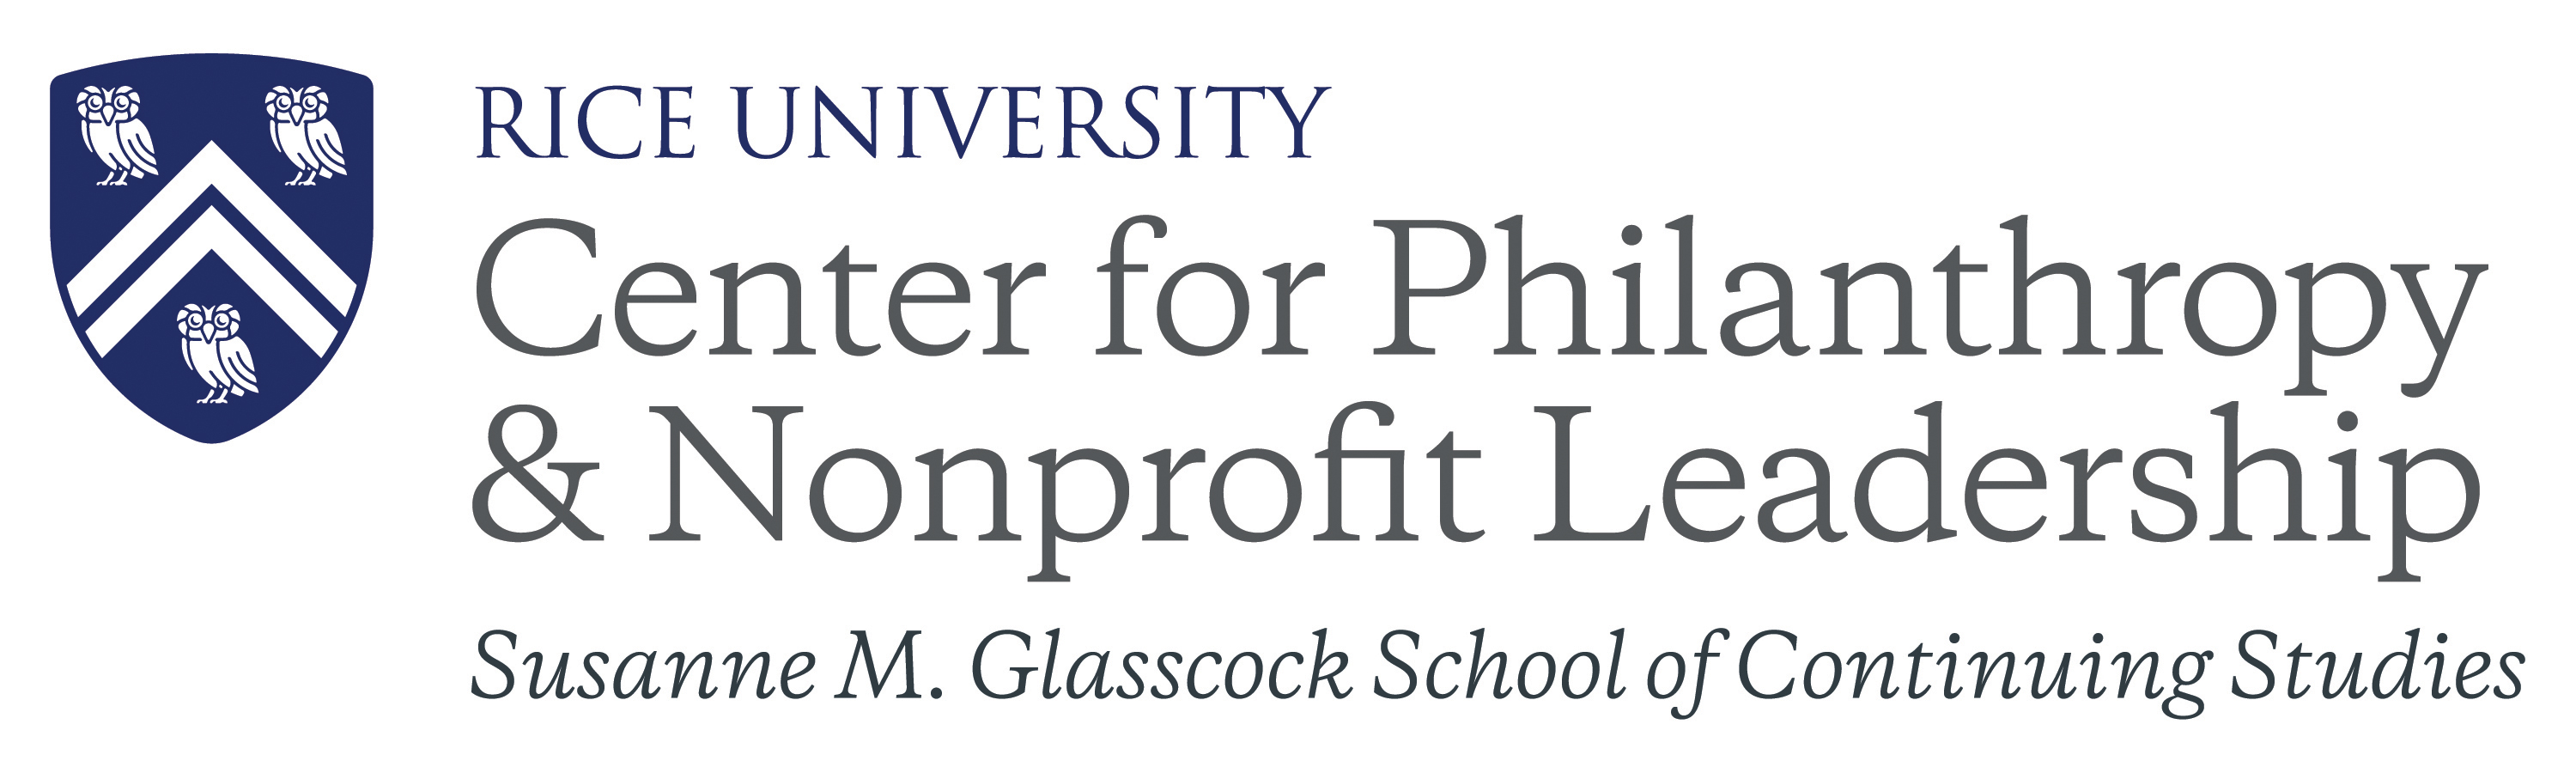 Glasscock School Center for Philanthropy & Nonprofit Leadership at Rice University logo